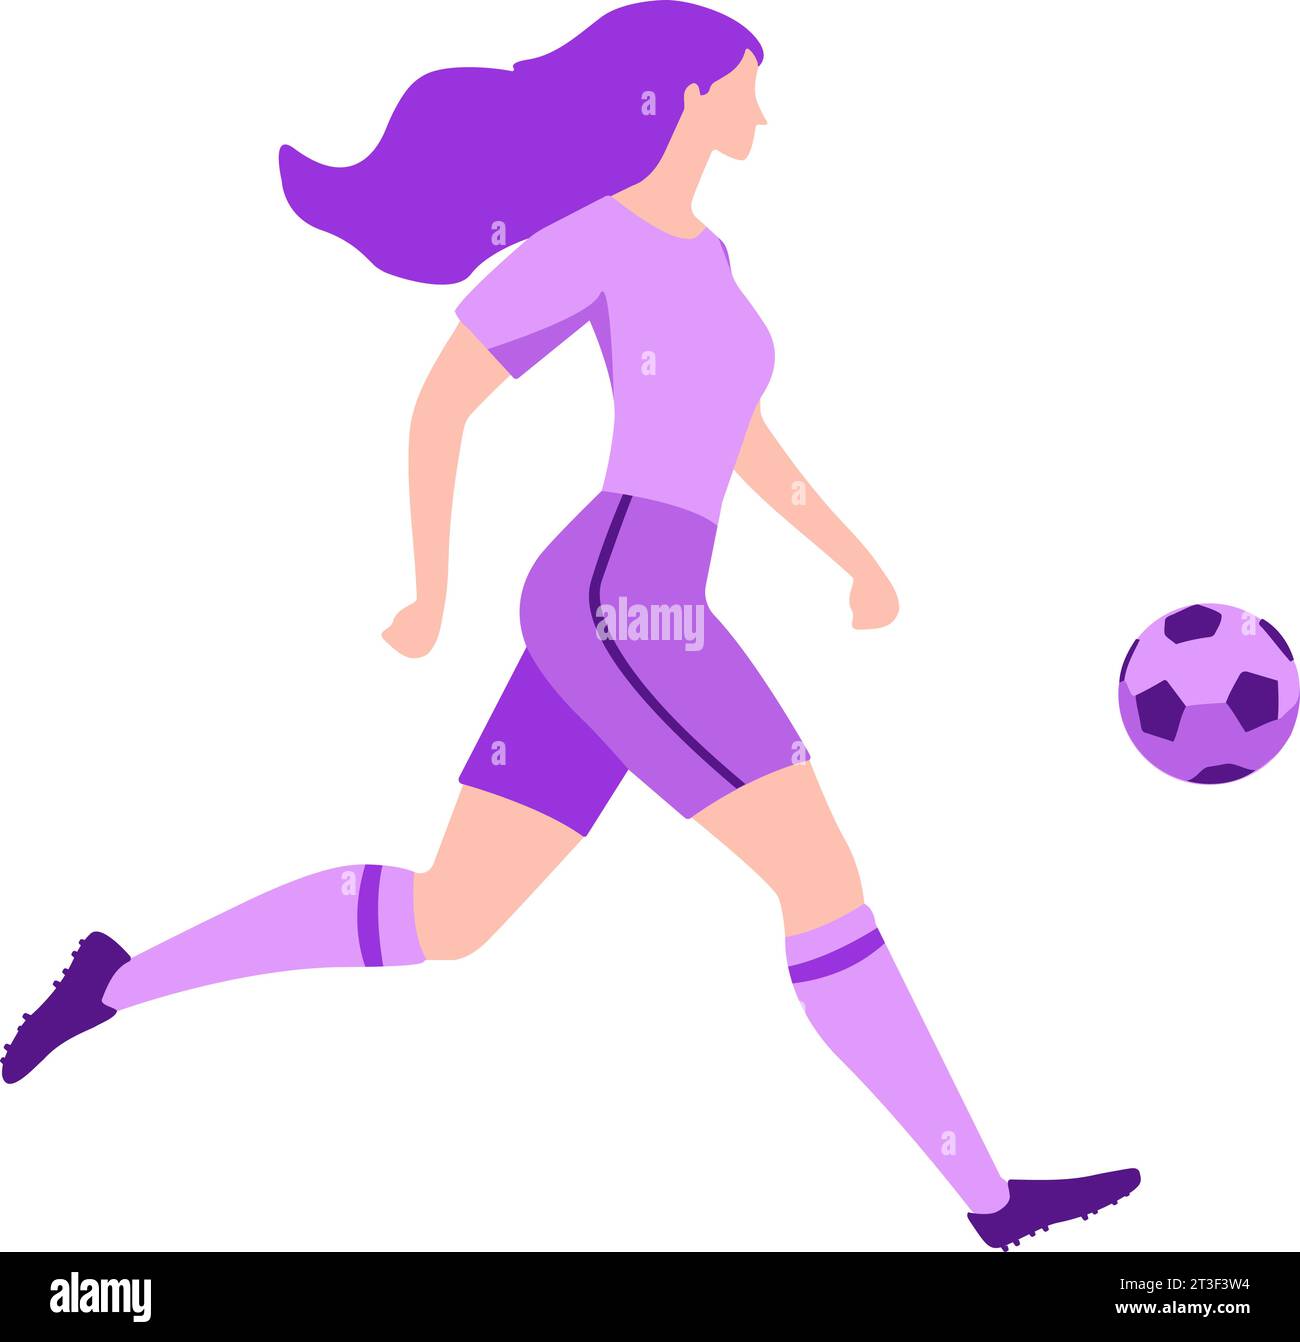 Frauenfußballspieler Clip Art. Illustration des abgewickelten Vektors Stock Vektor